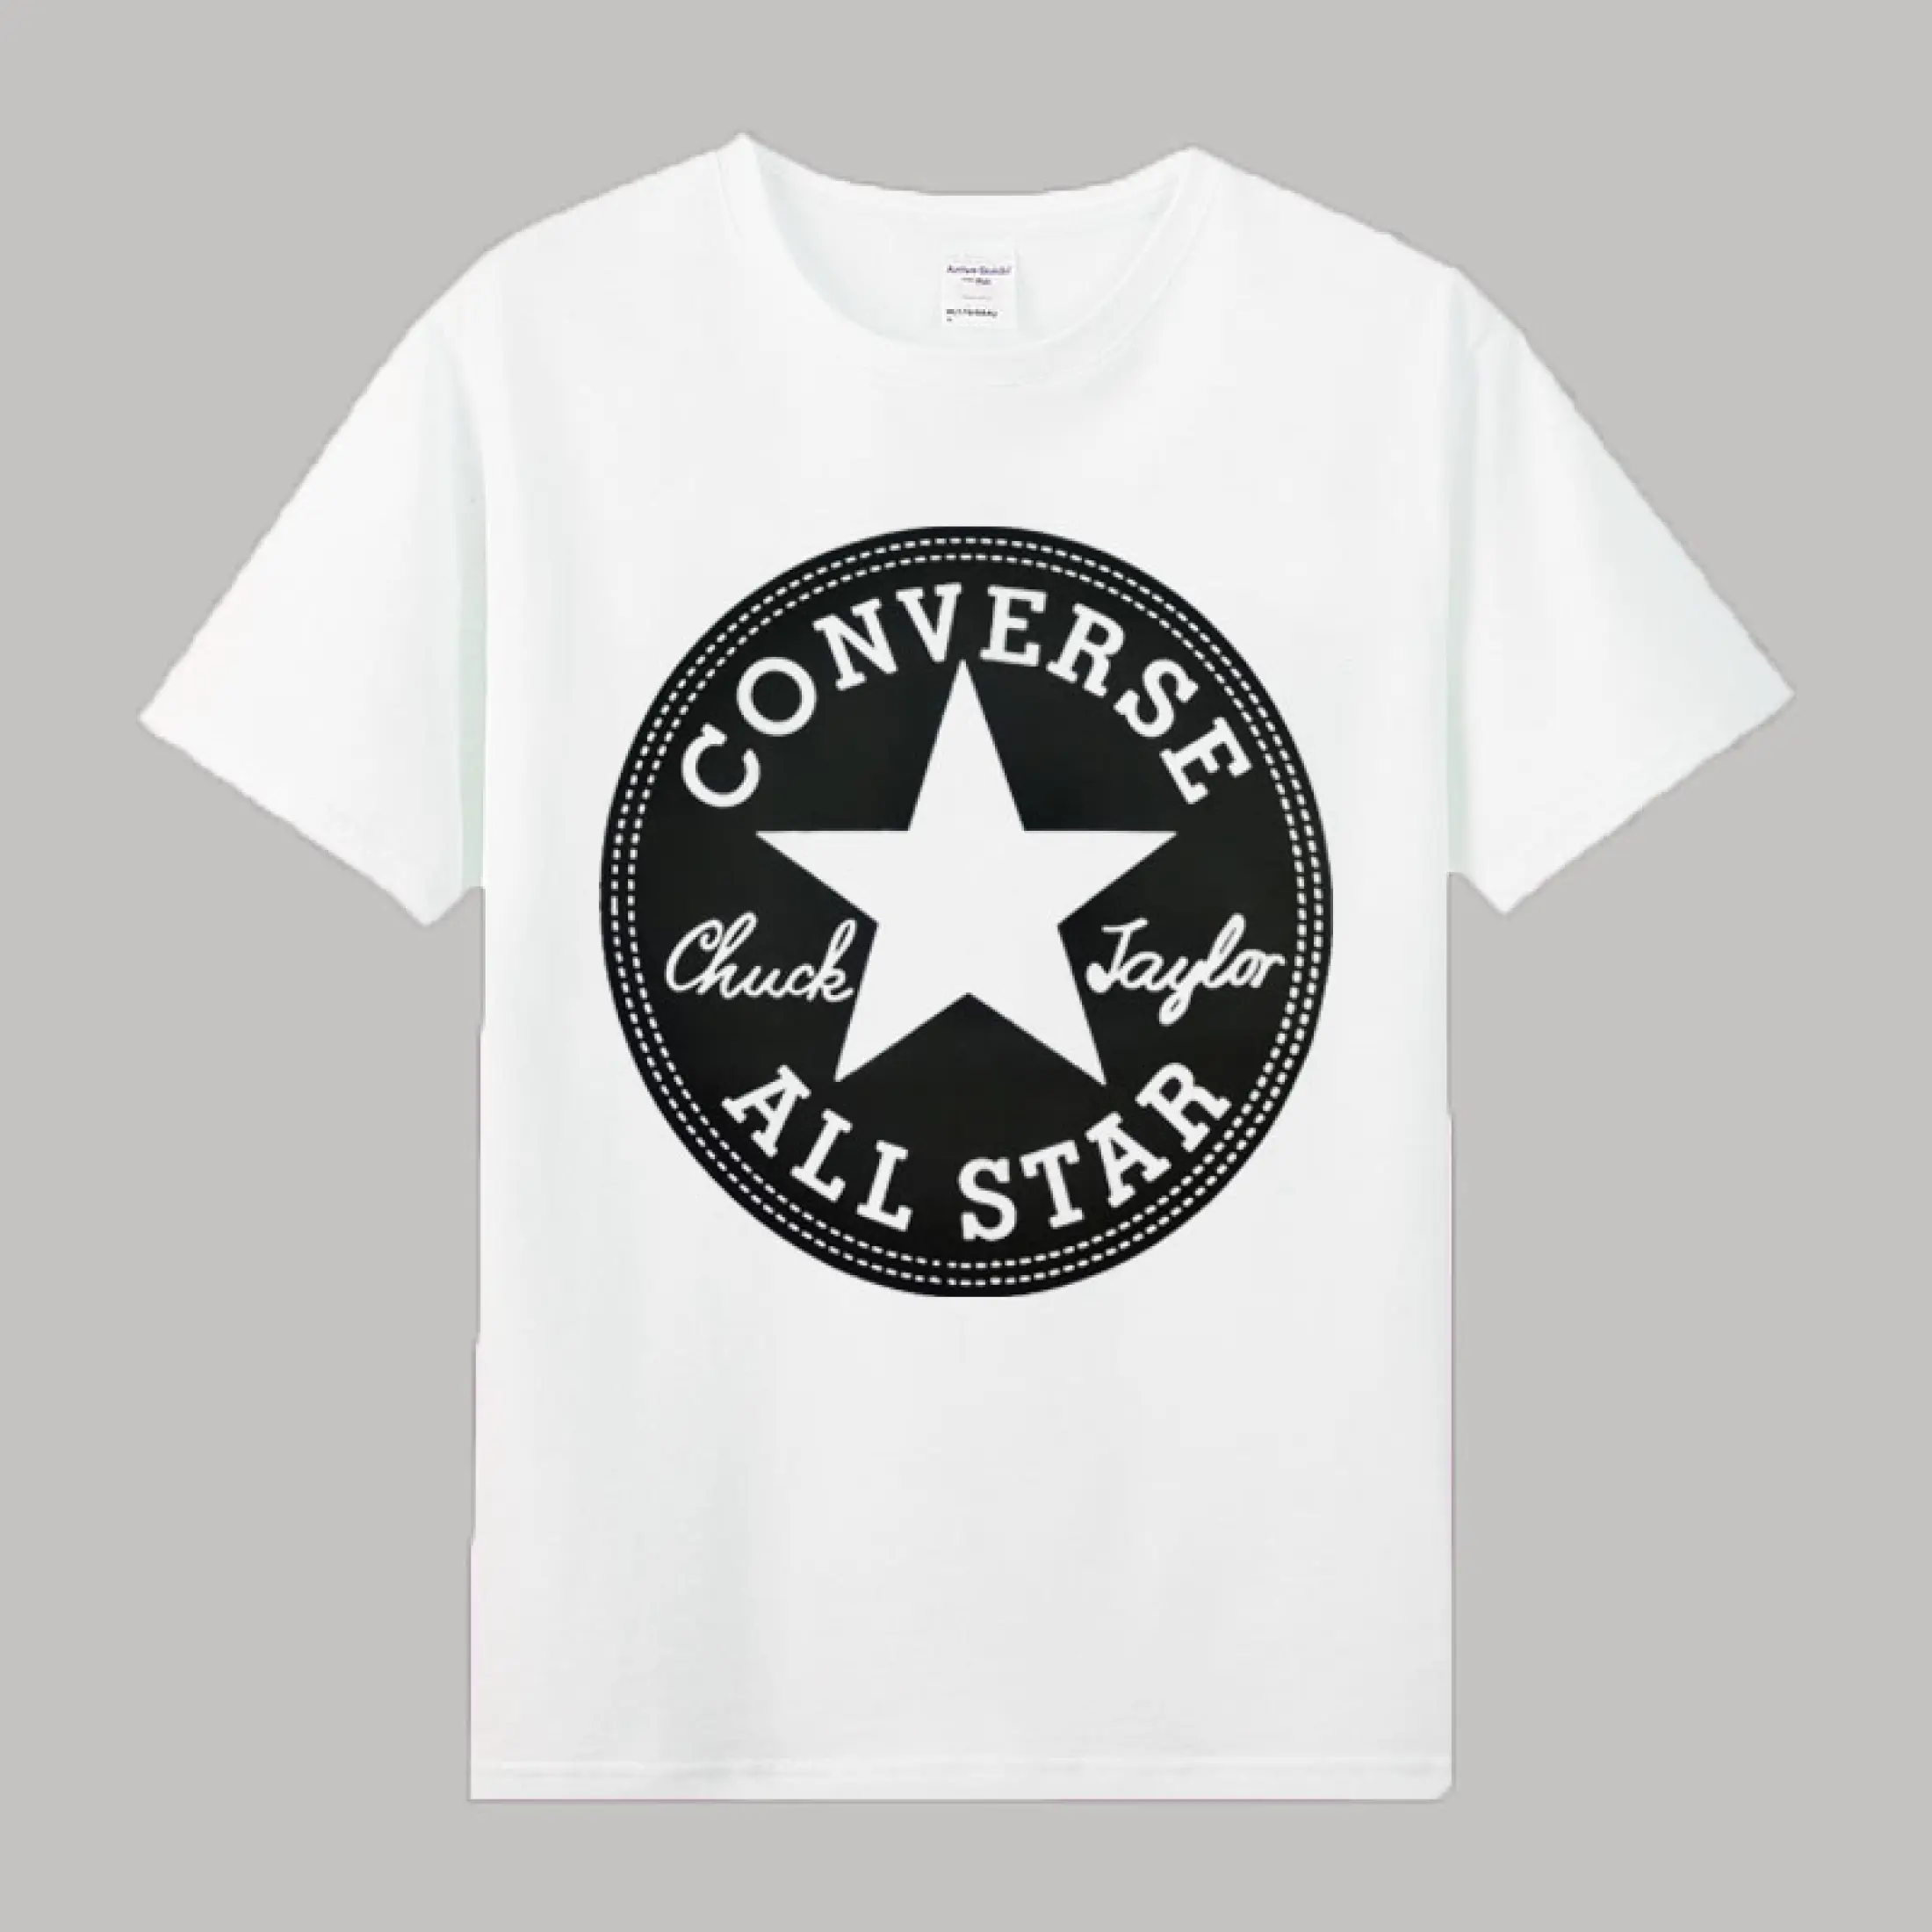 converse shirt price